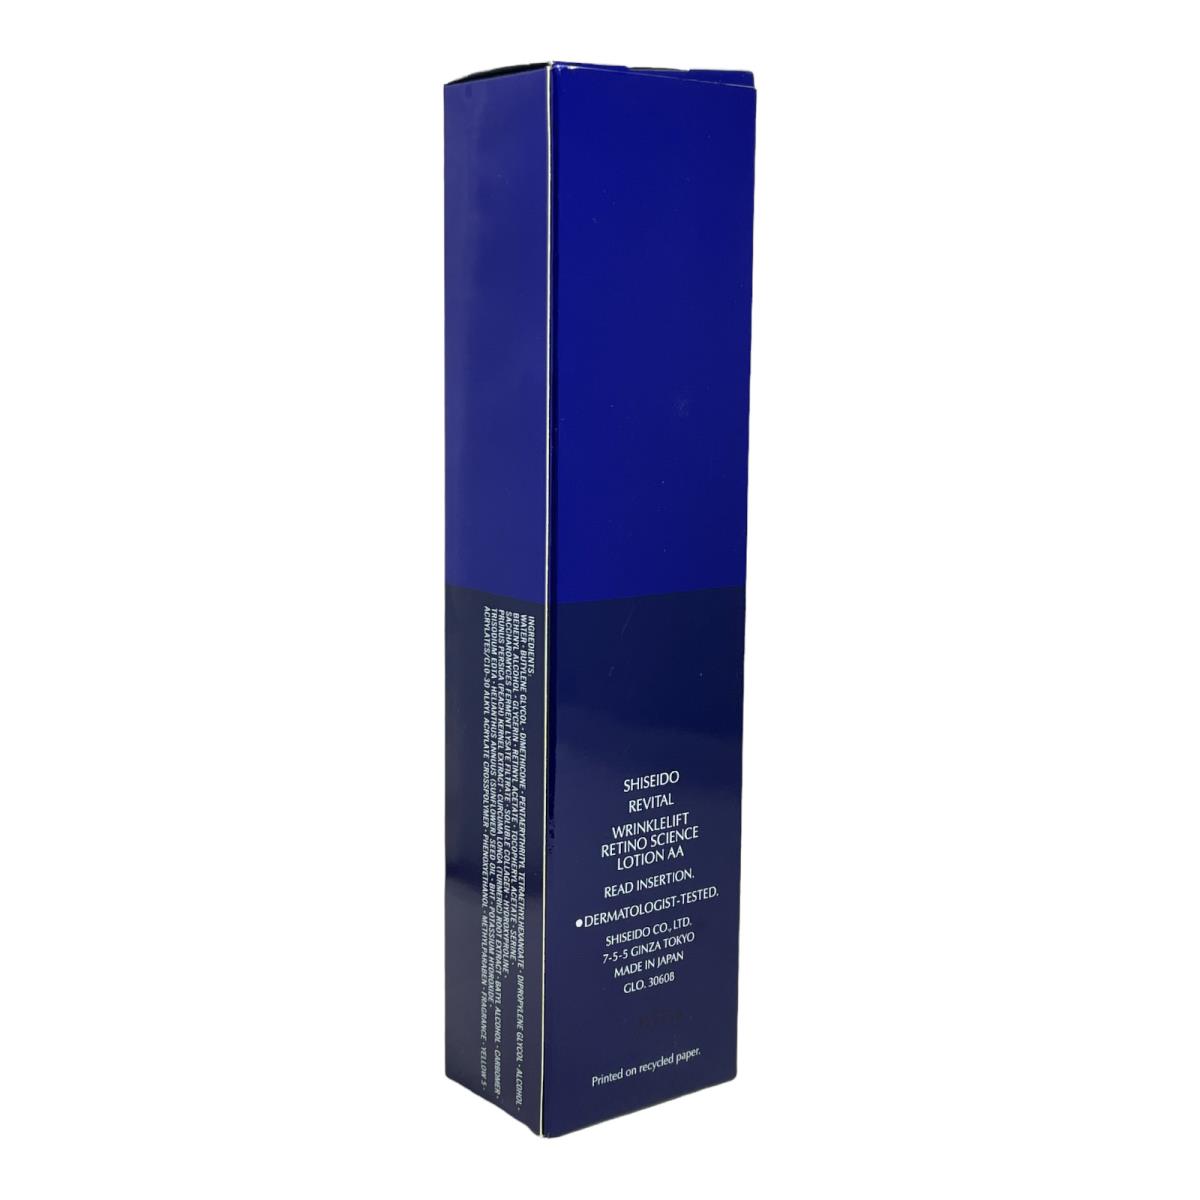 Shiseido Revital Wrinklelift Retinol Science Lotion AA 125ml/4.2fl.oz